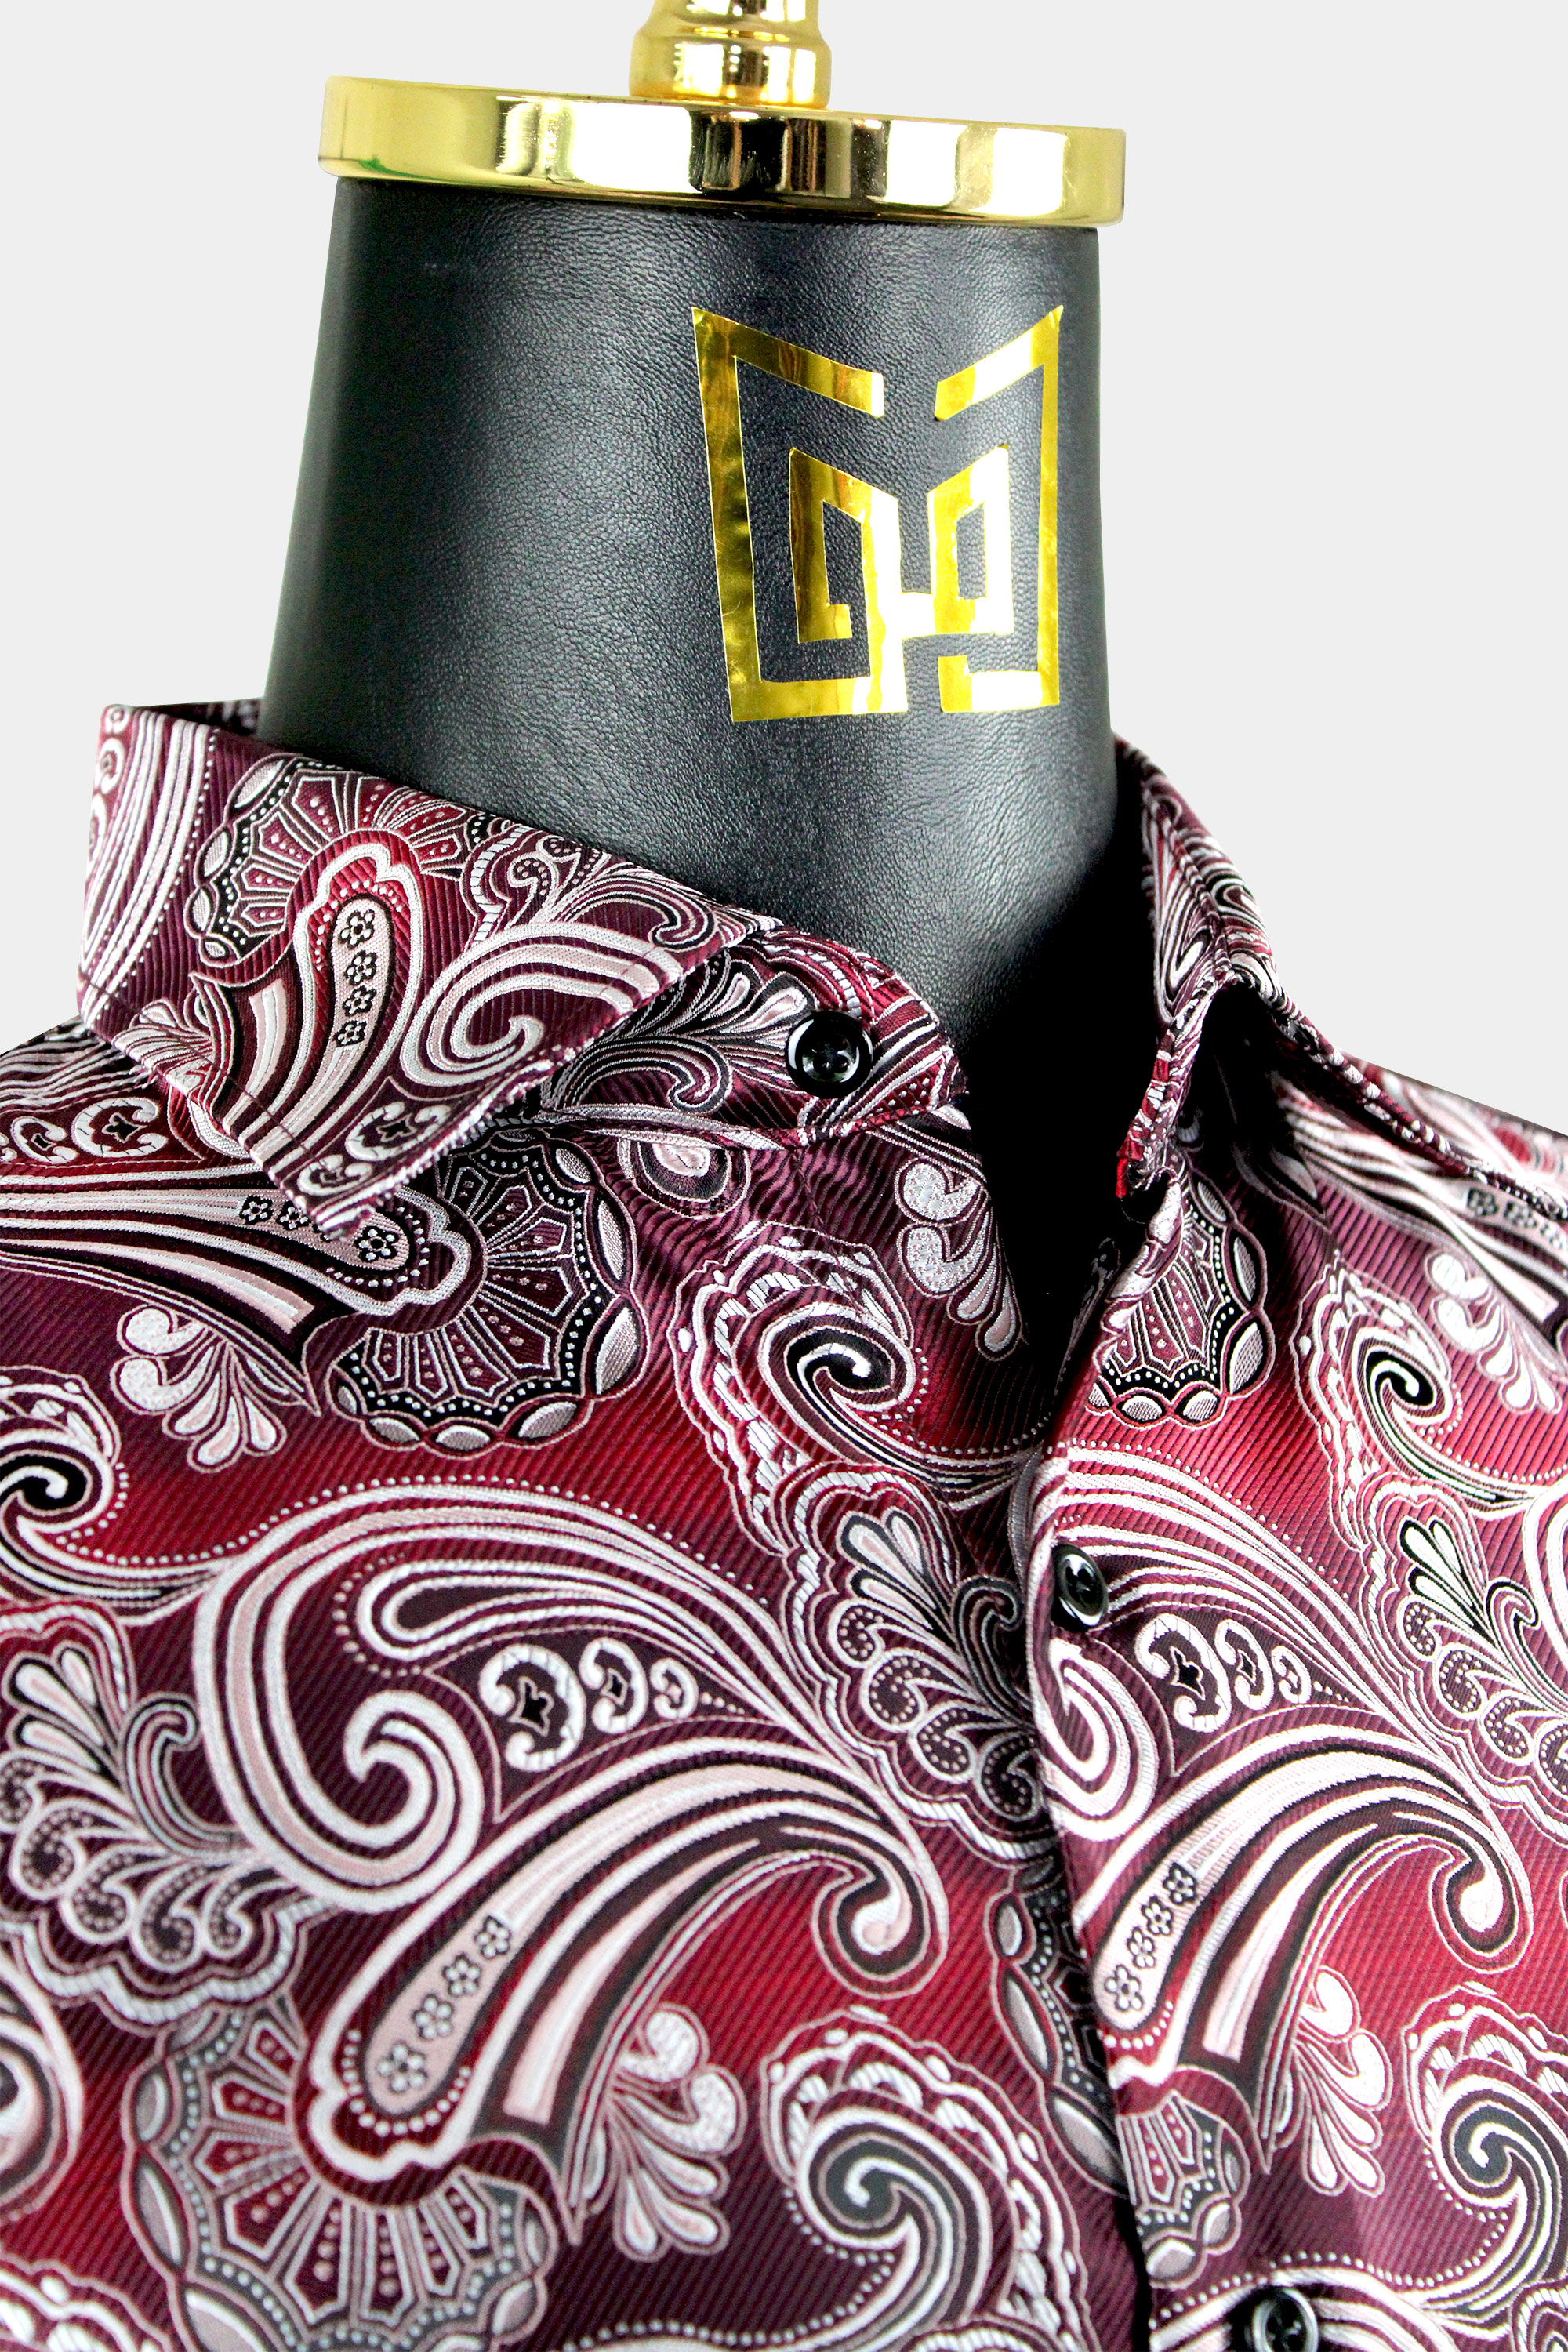 Luxury-Exotic-Mens-Dress-Shirt-In-Maroon-Burgundy-from-Gentlemansguru.com